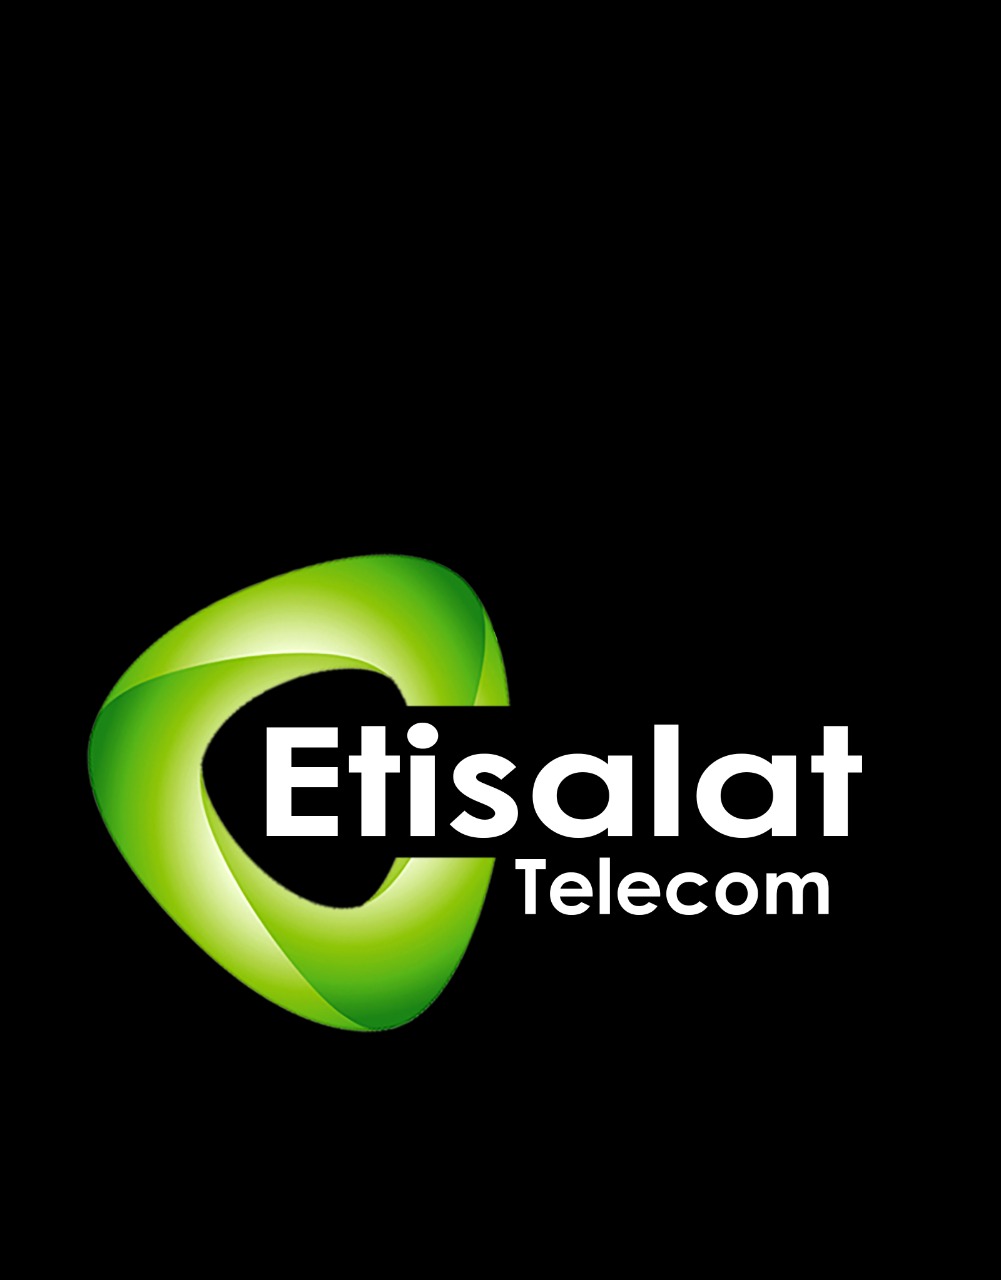 Etisalat Telecom